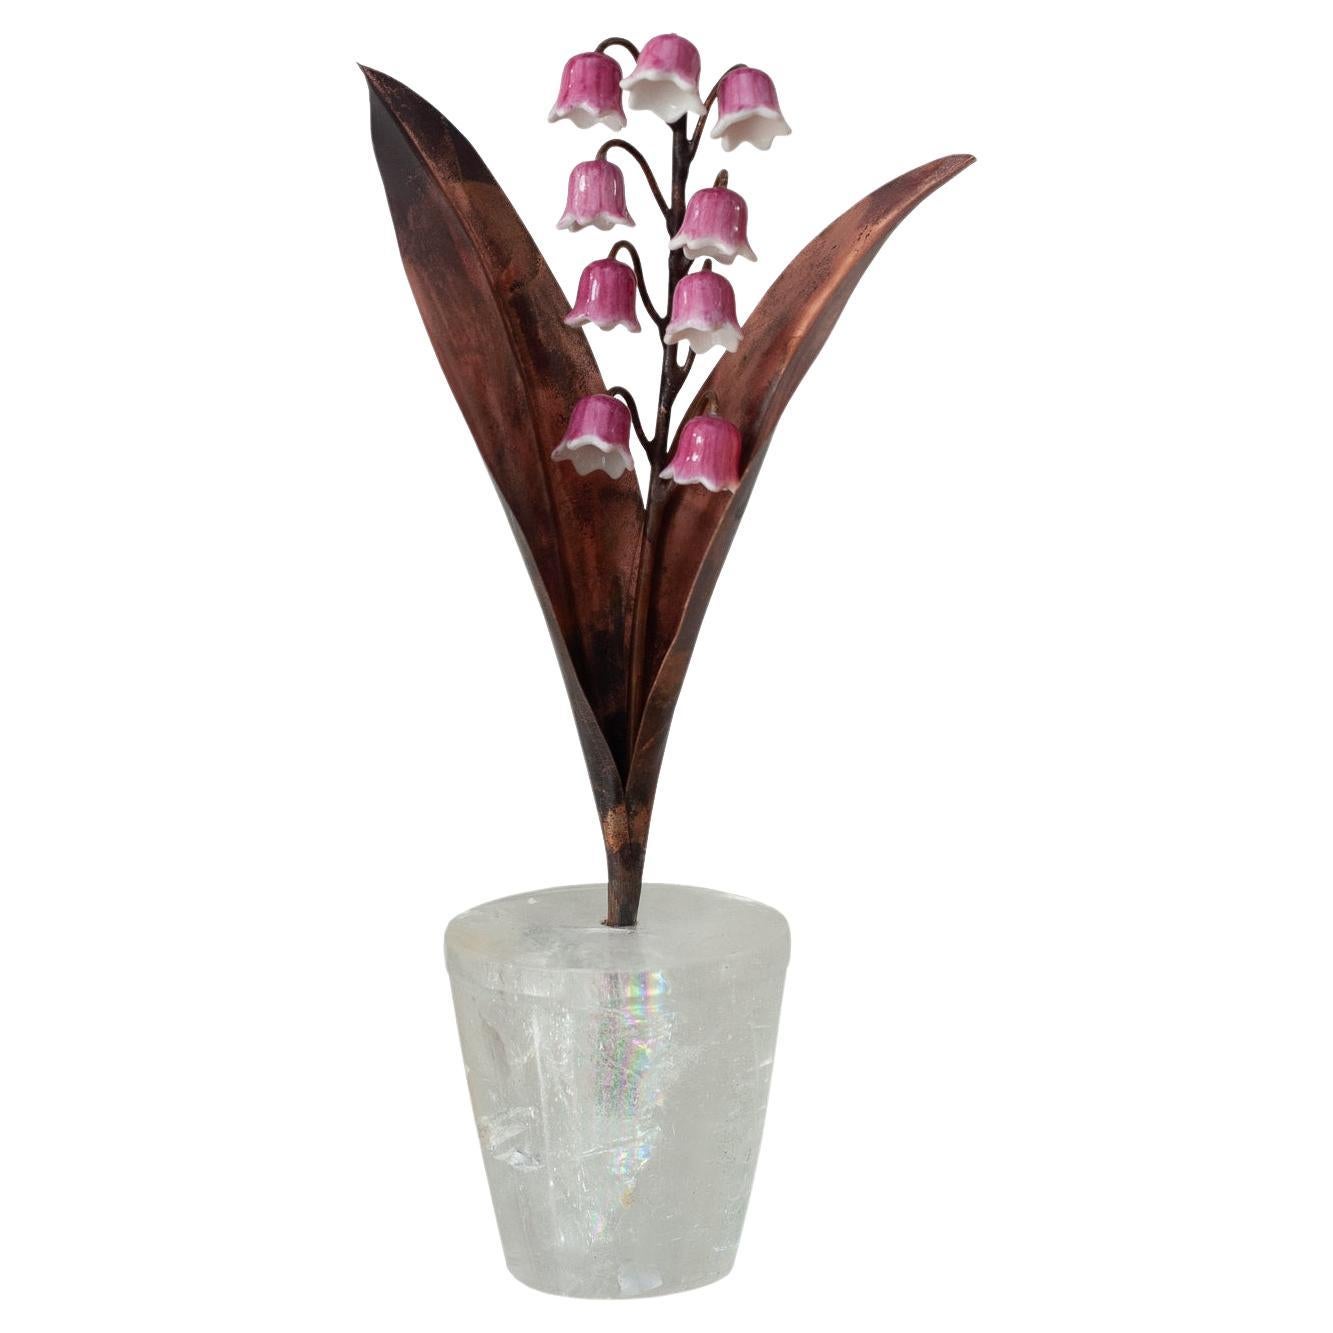 Samuel Mazy x Maison Nurita Pink Glazed Porcelain Lily of the Valley Sculpture